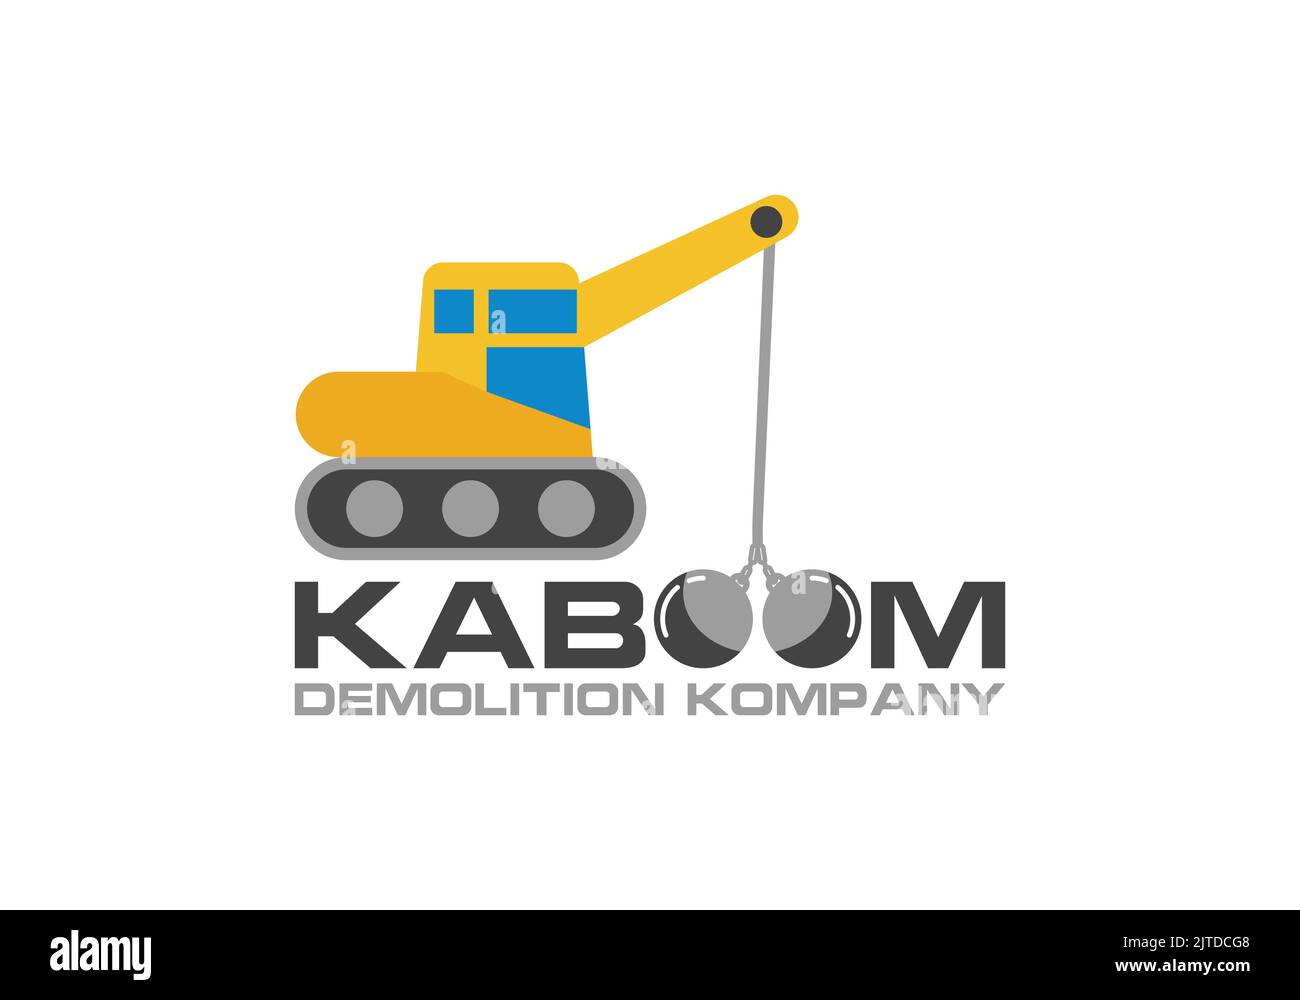 KABOOM Demolition Company Logo Design Template Stock Vector